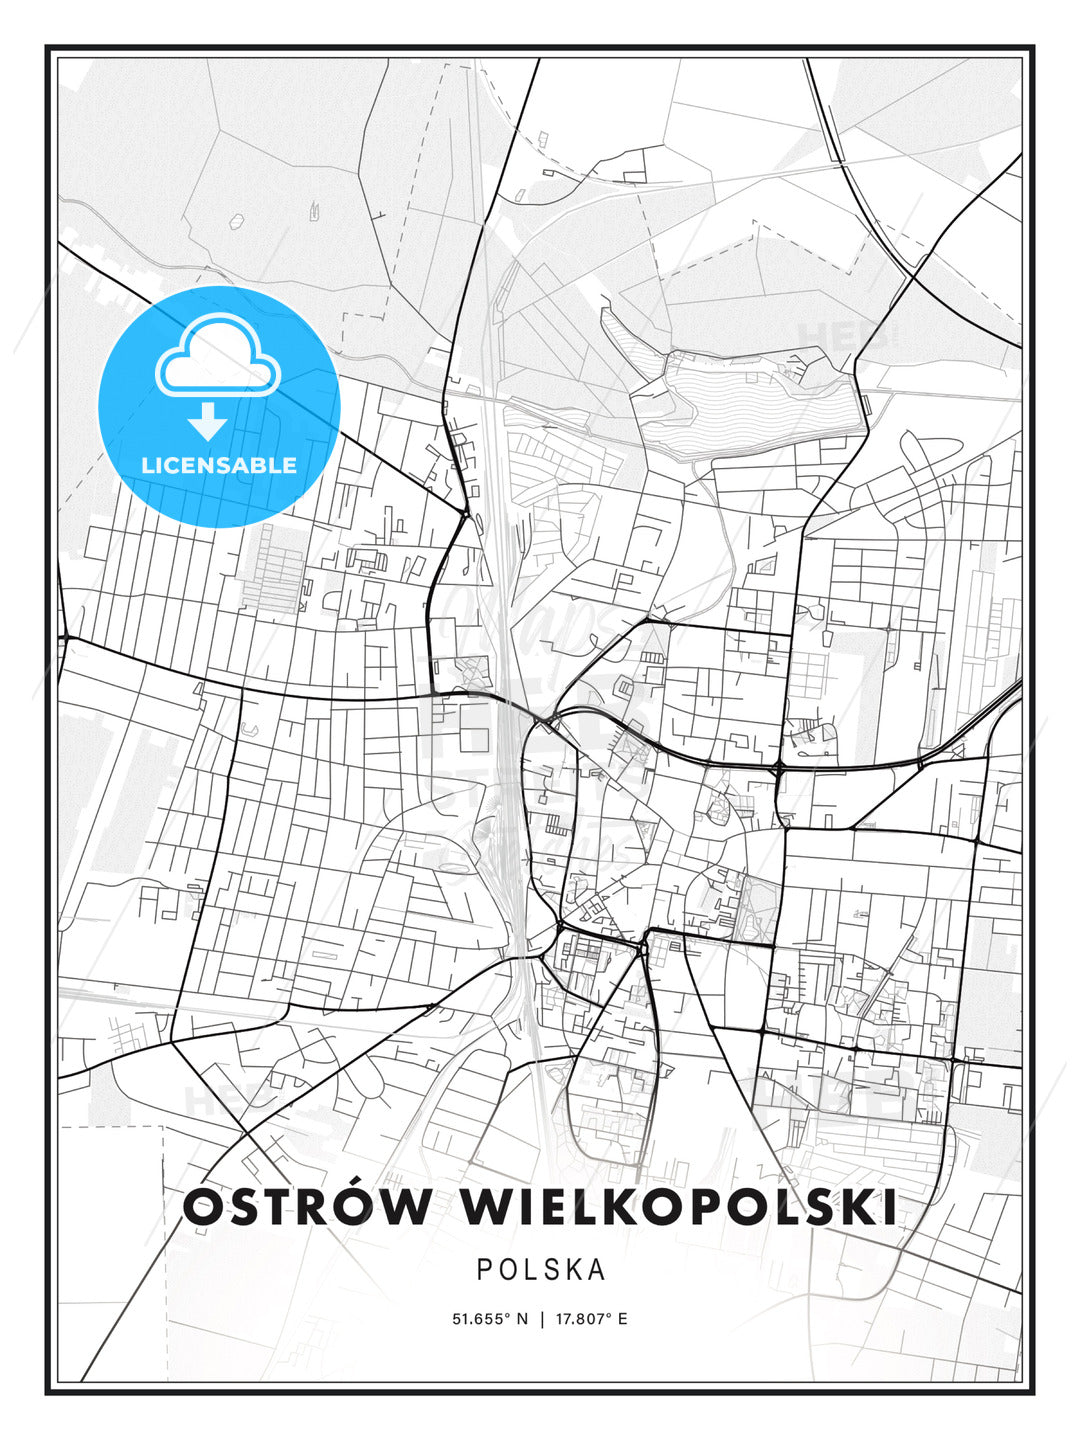 Ostrów Wielkopolski, Poland, Modern Print Template in Various Formats - HEBSTREITS Sketches